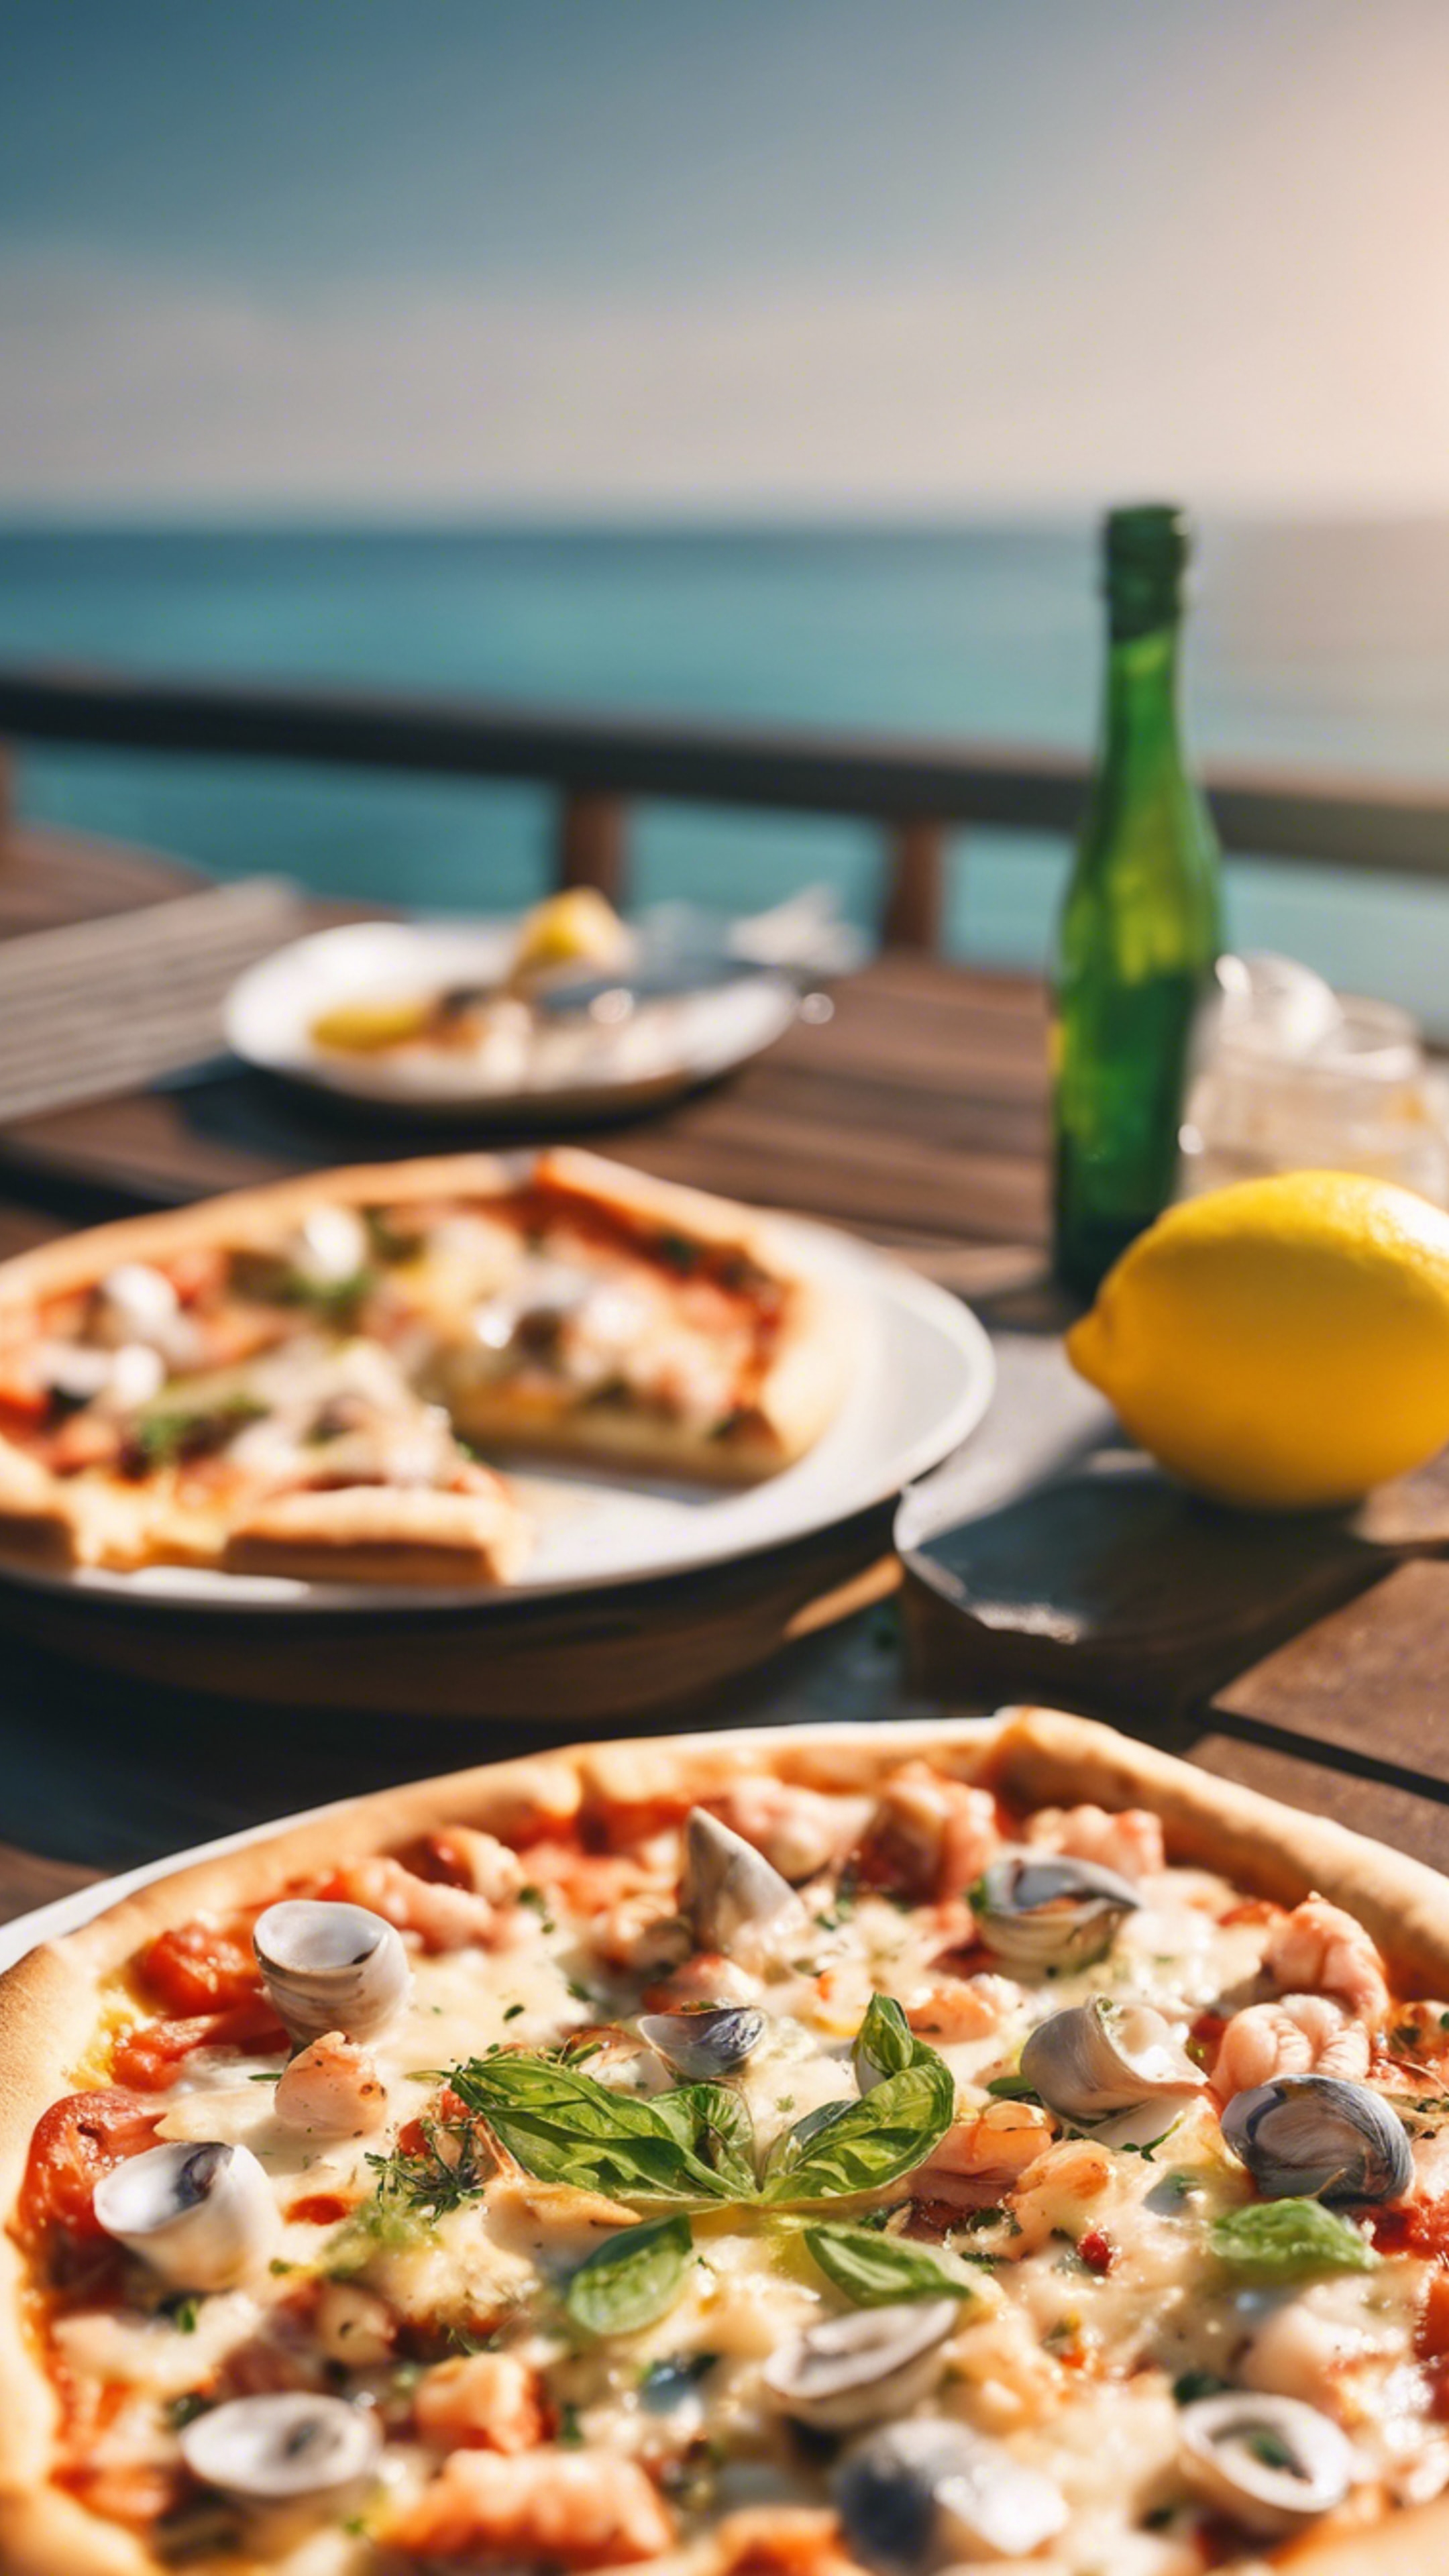 A zesty lemon and seafood pizza on a sunny seaside cafe table. Hình nền[3a16046c2c4041a9a353]